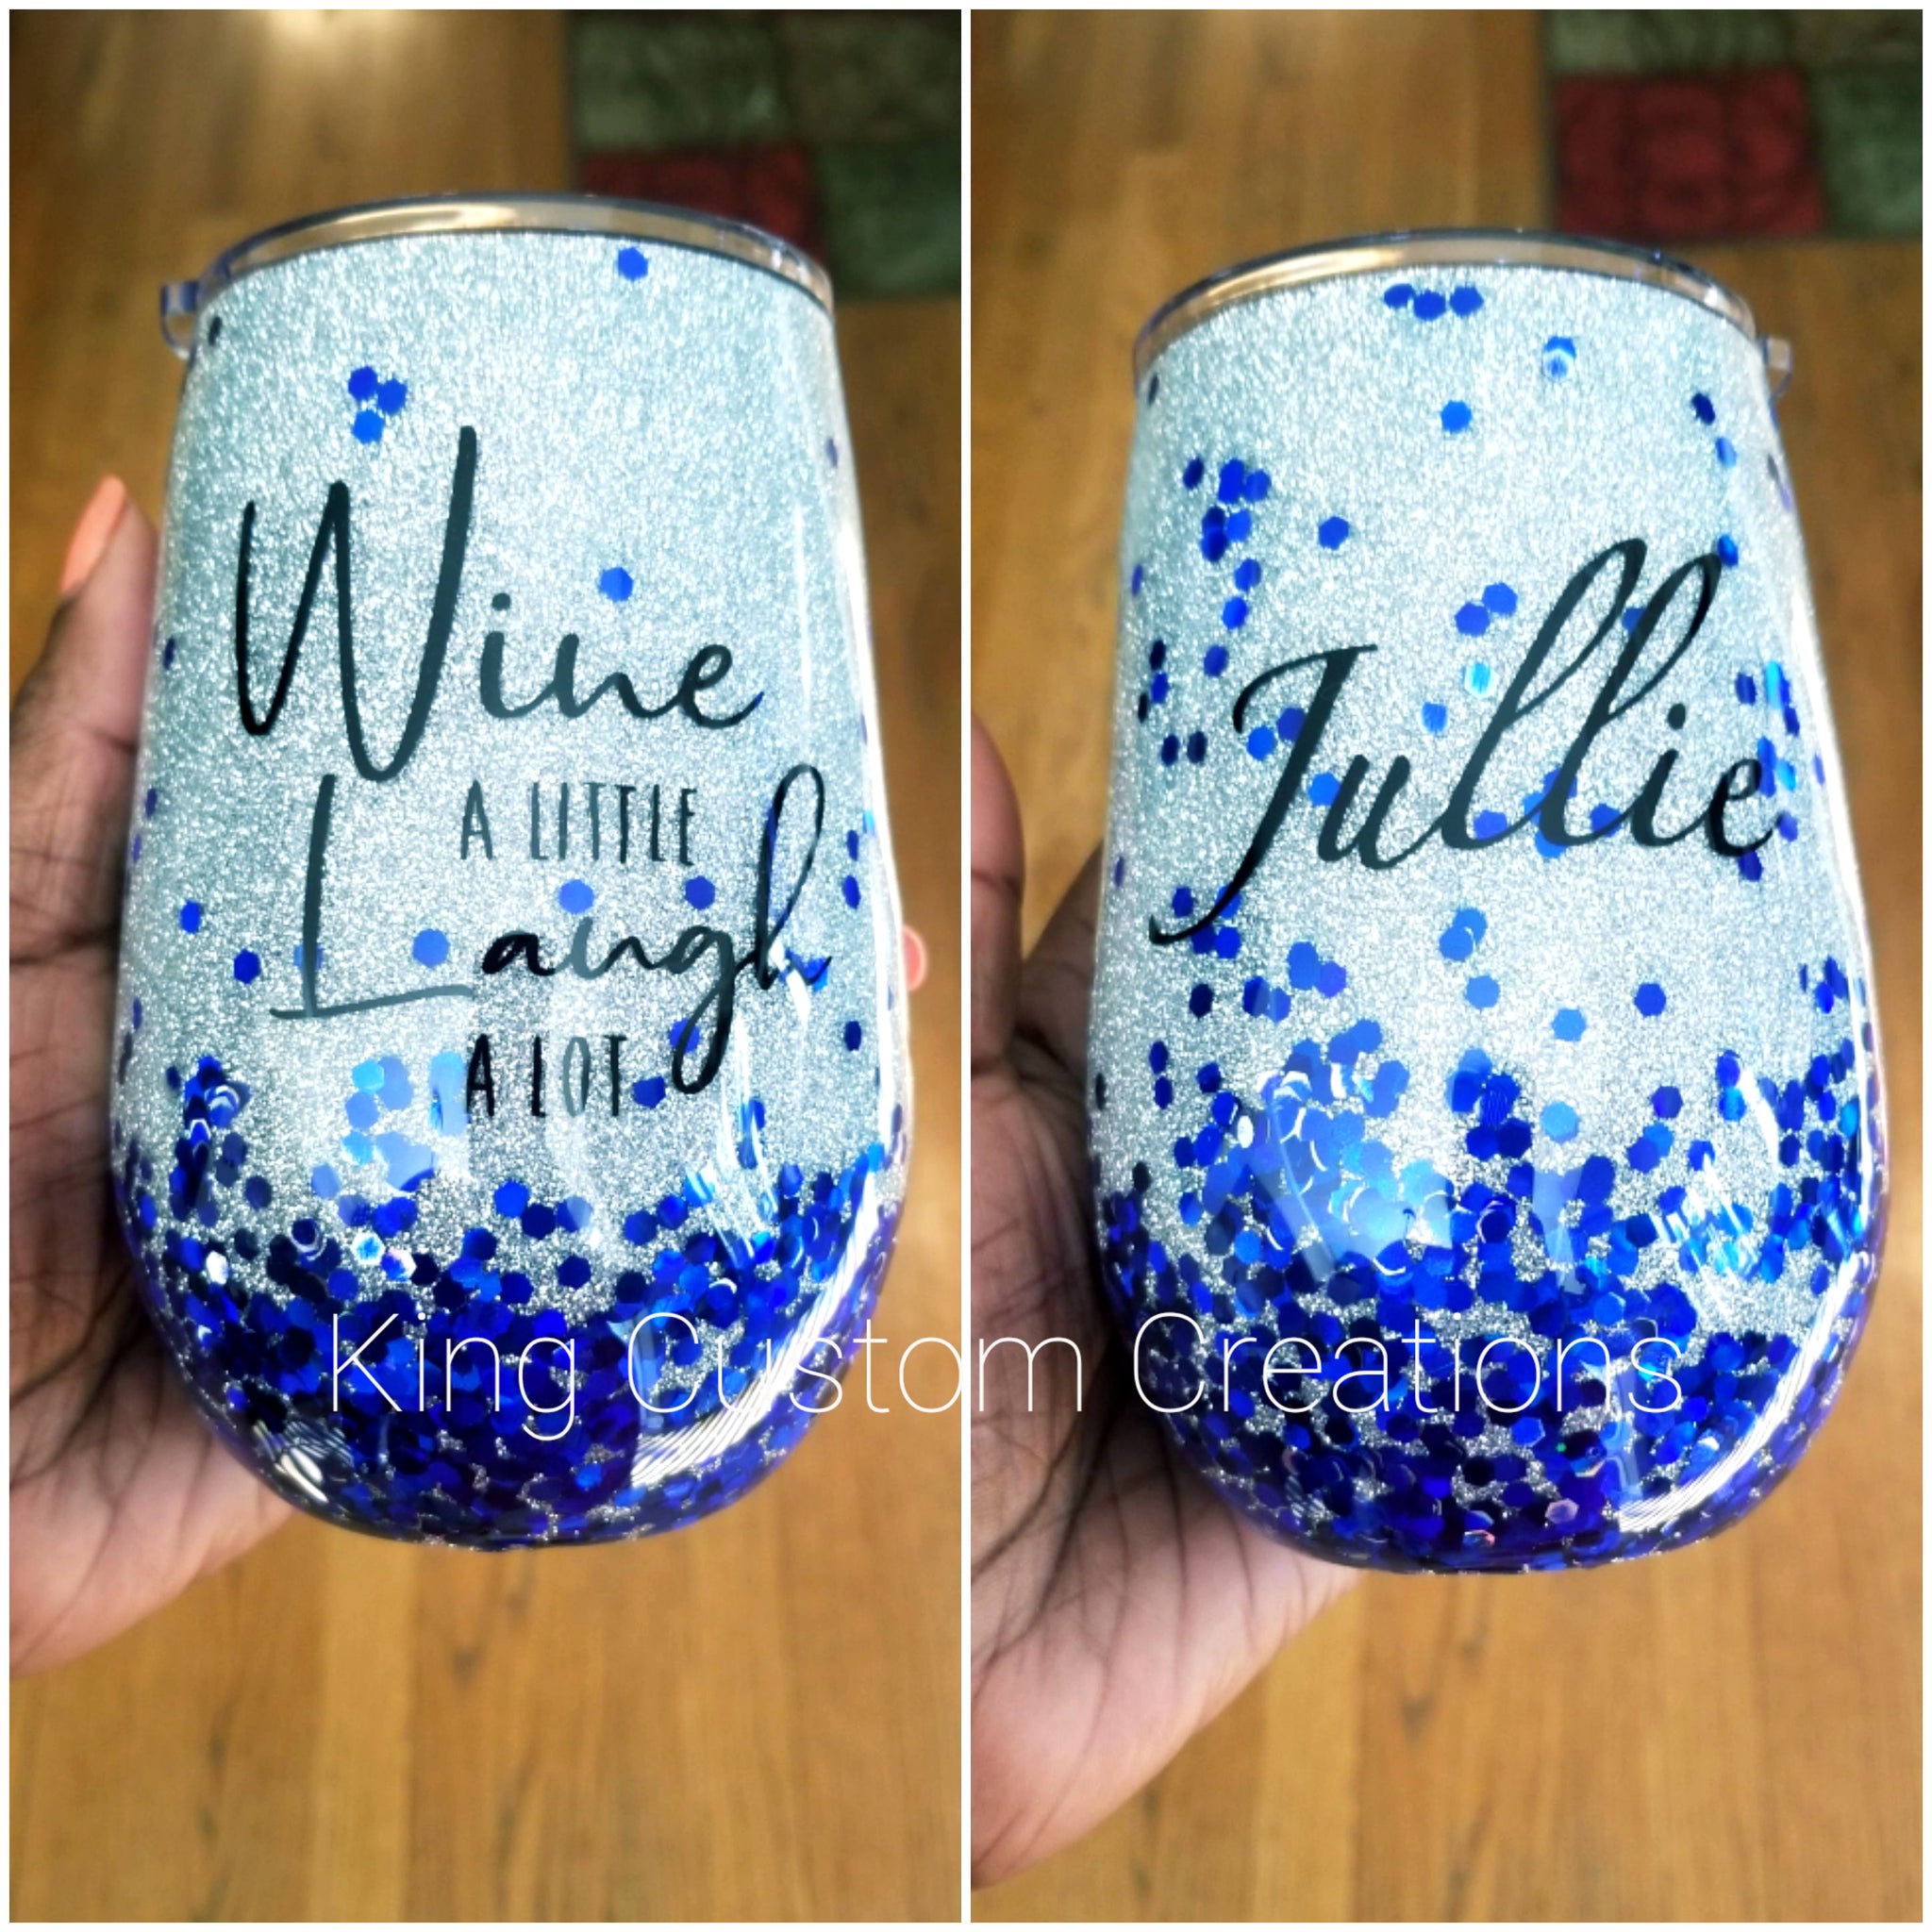 Drinkware - "Wine a Little Laugh Alot" Wine Tumbler